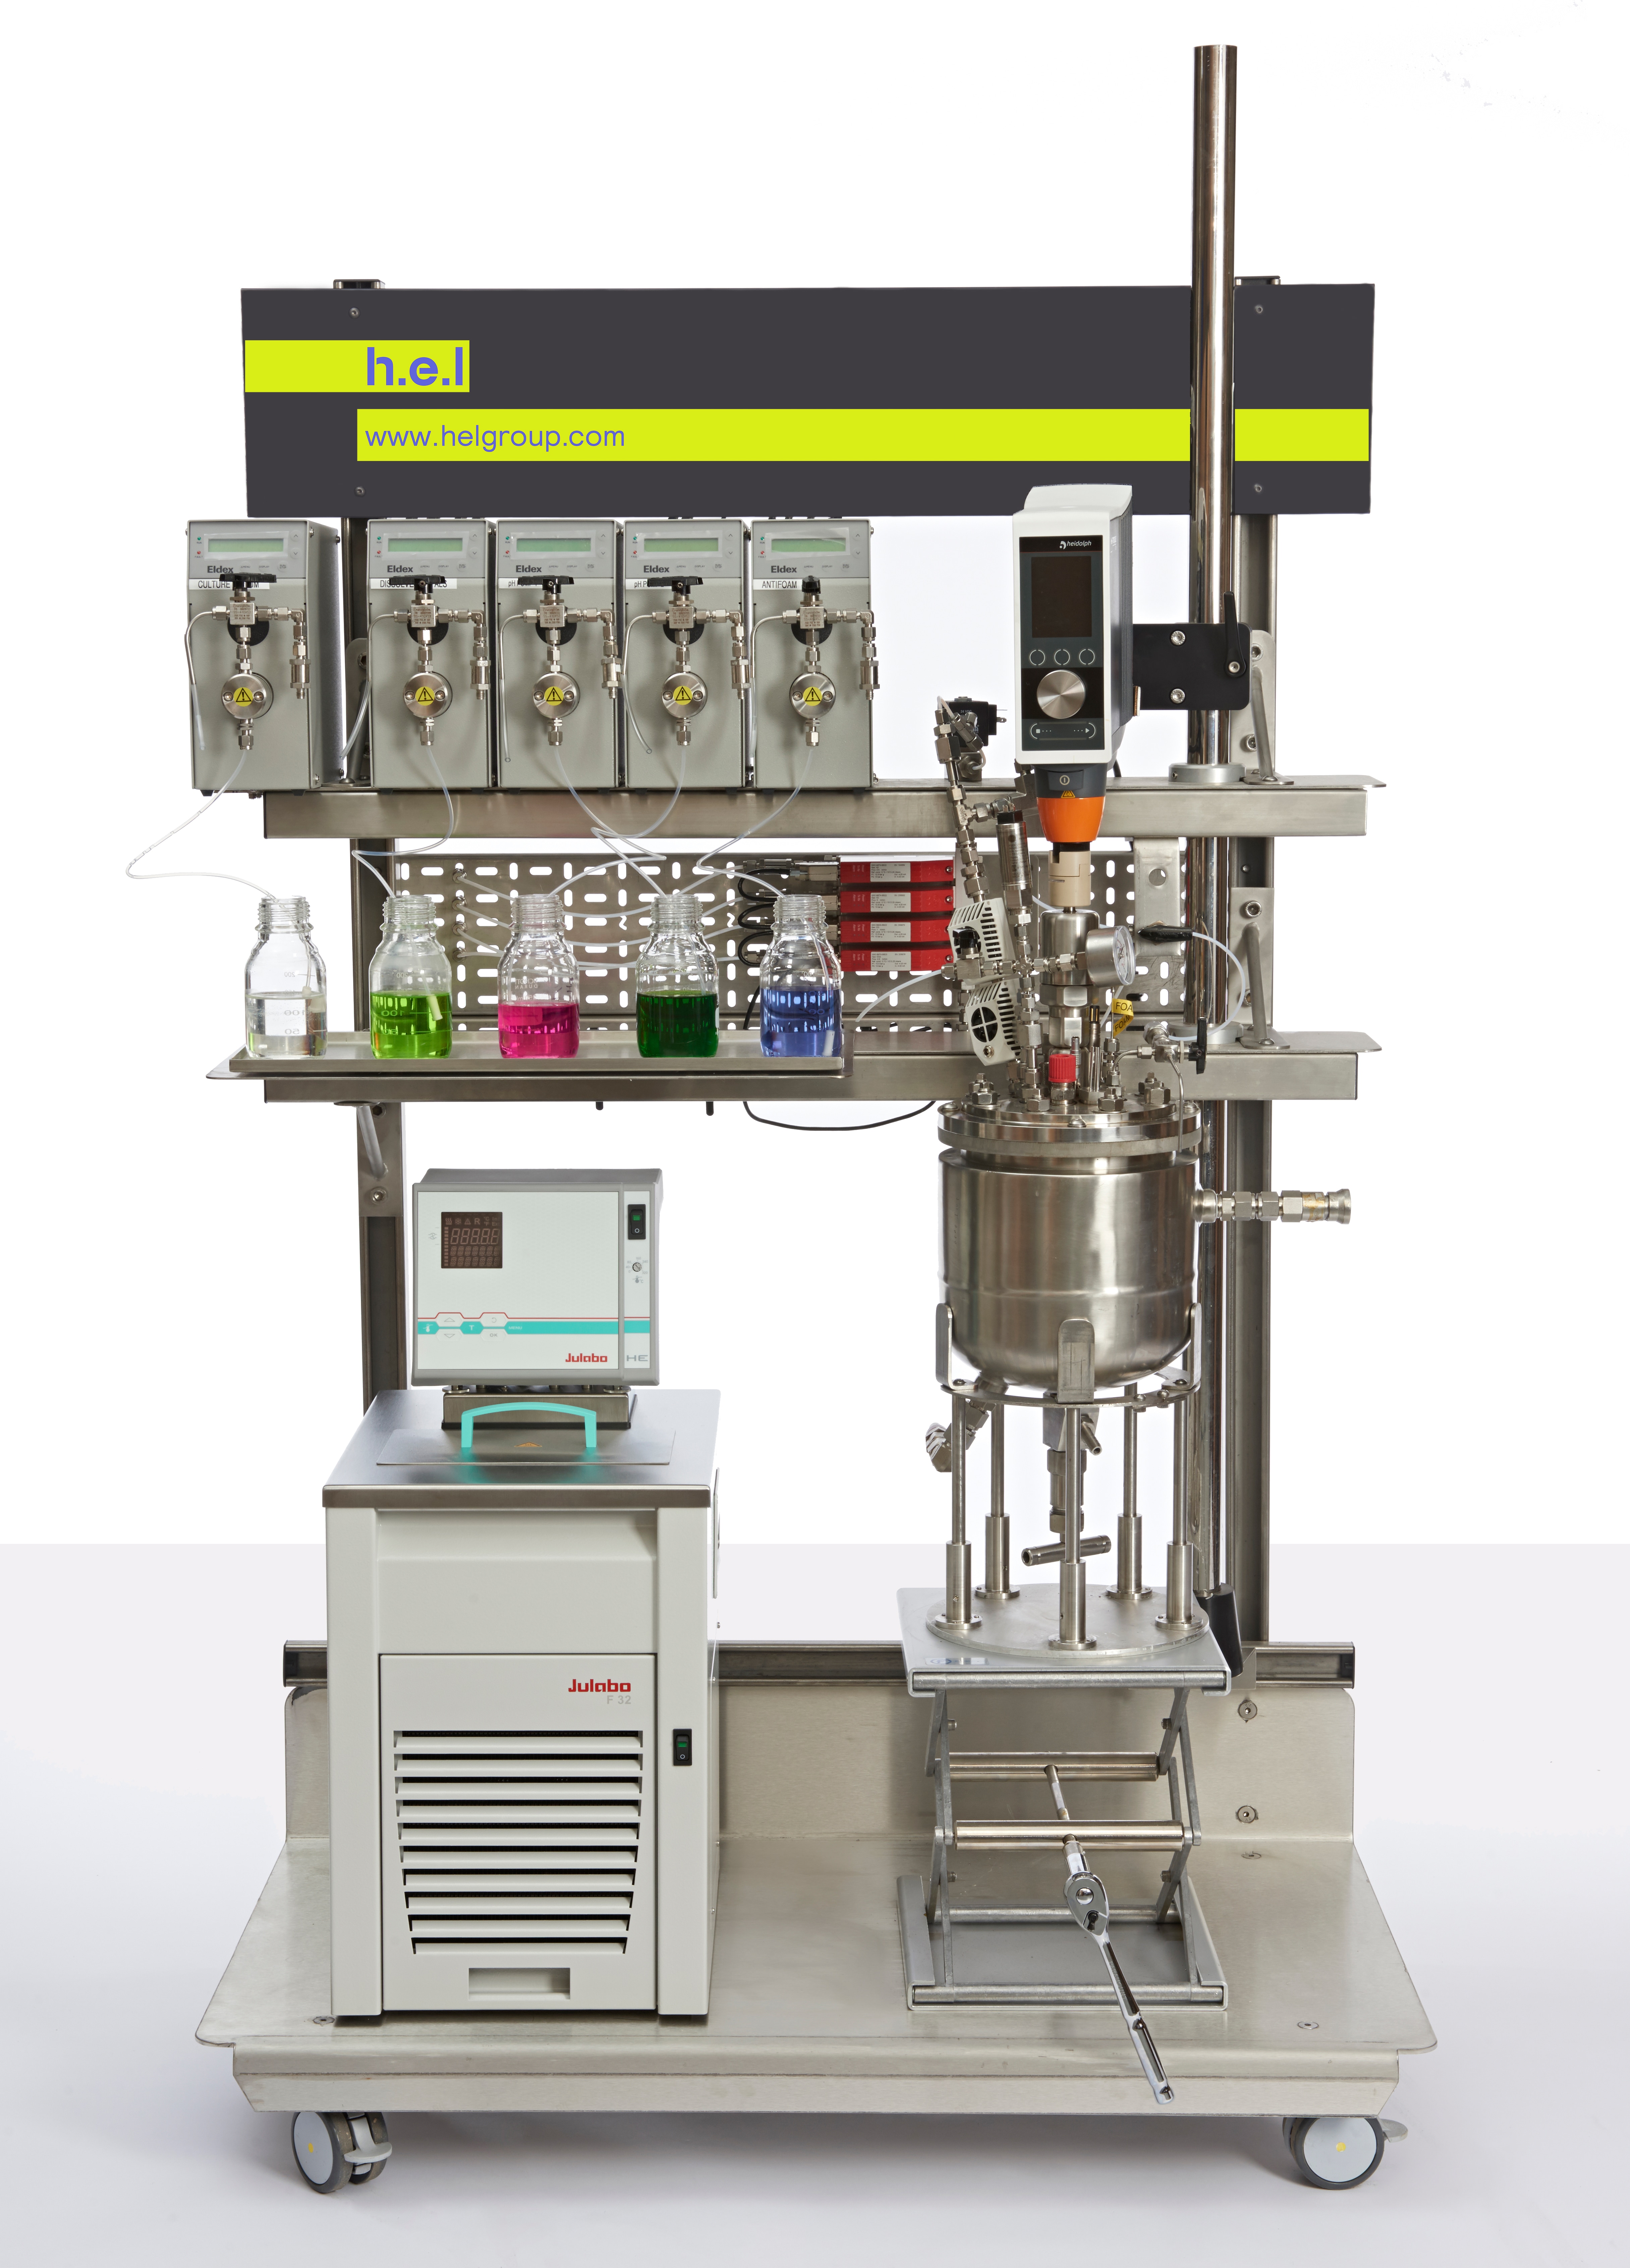 BioXplorer 5000: An Automated, Lab-Scale Bioreactor System